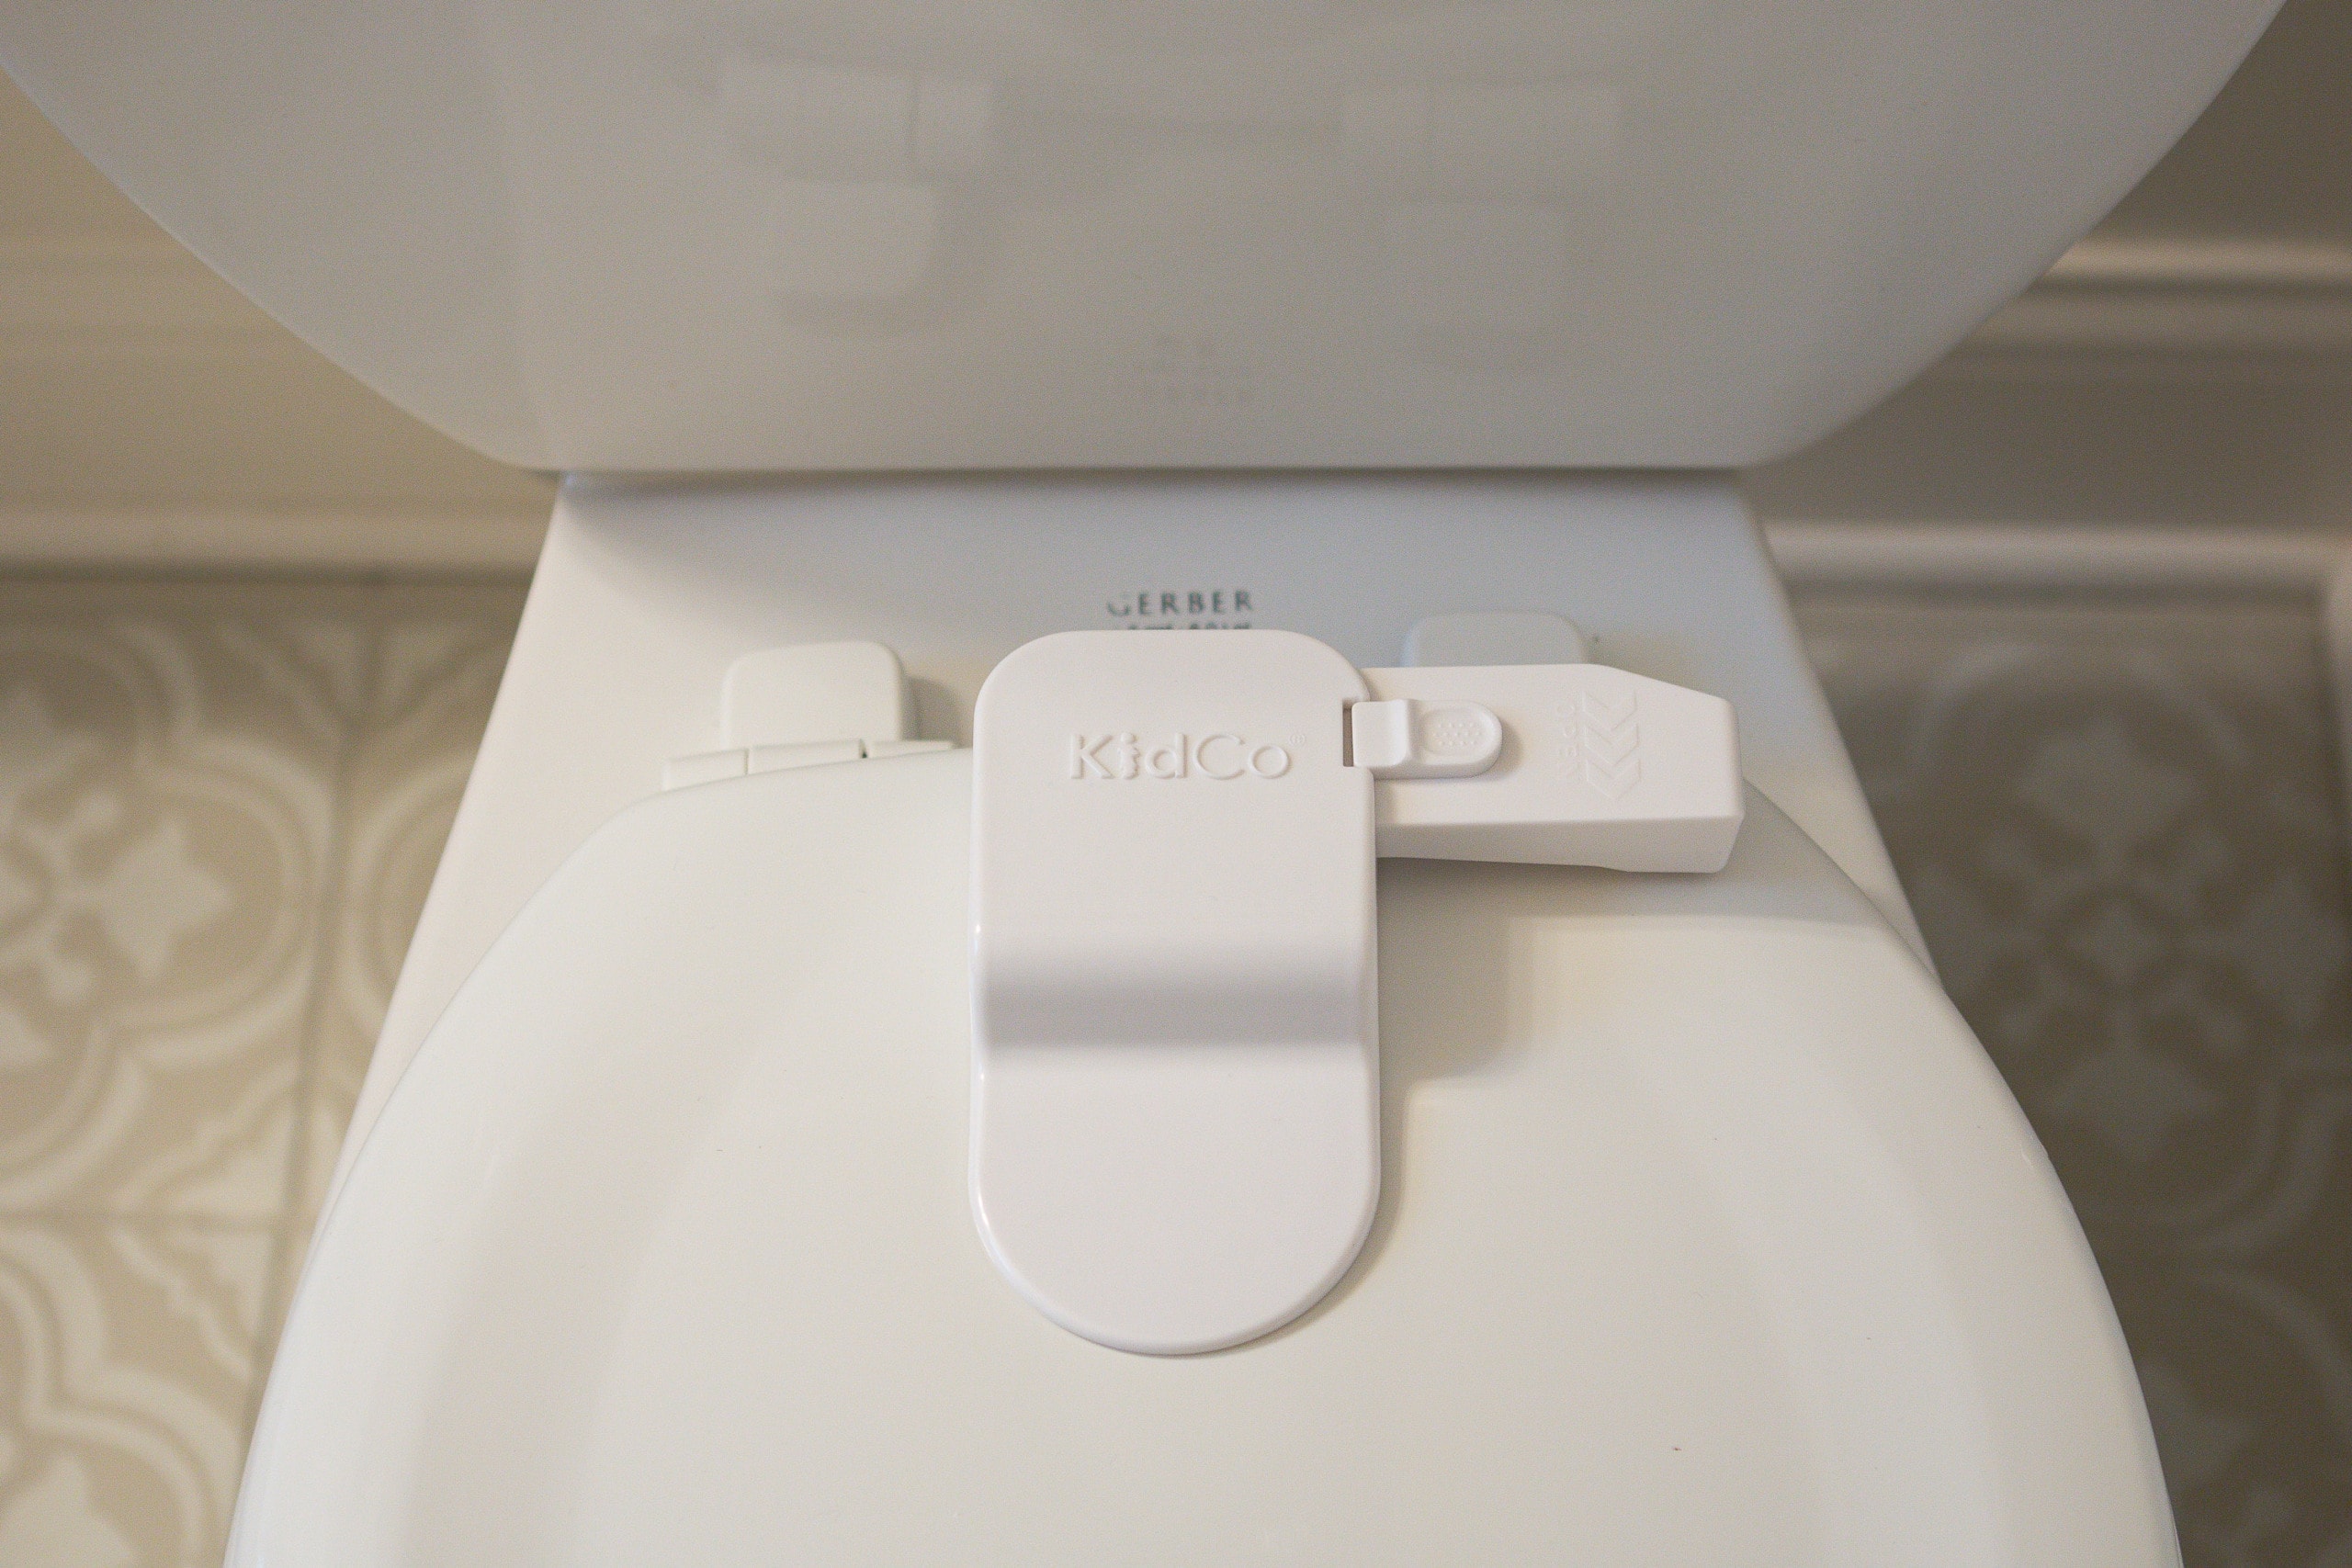 Kidco toilet locks